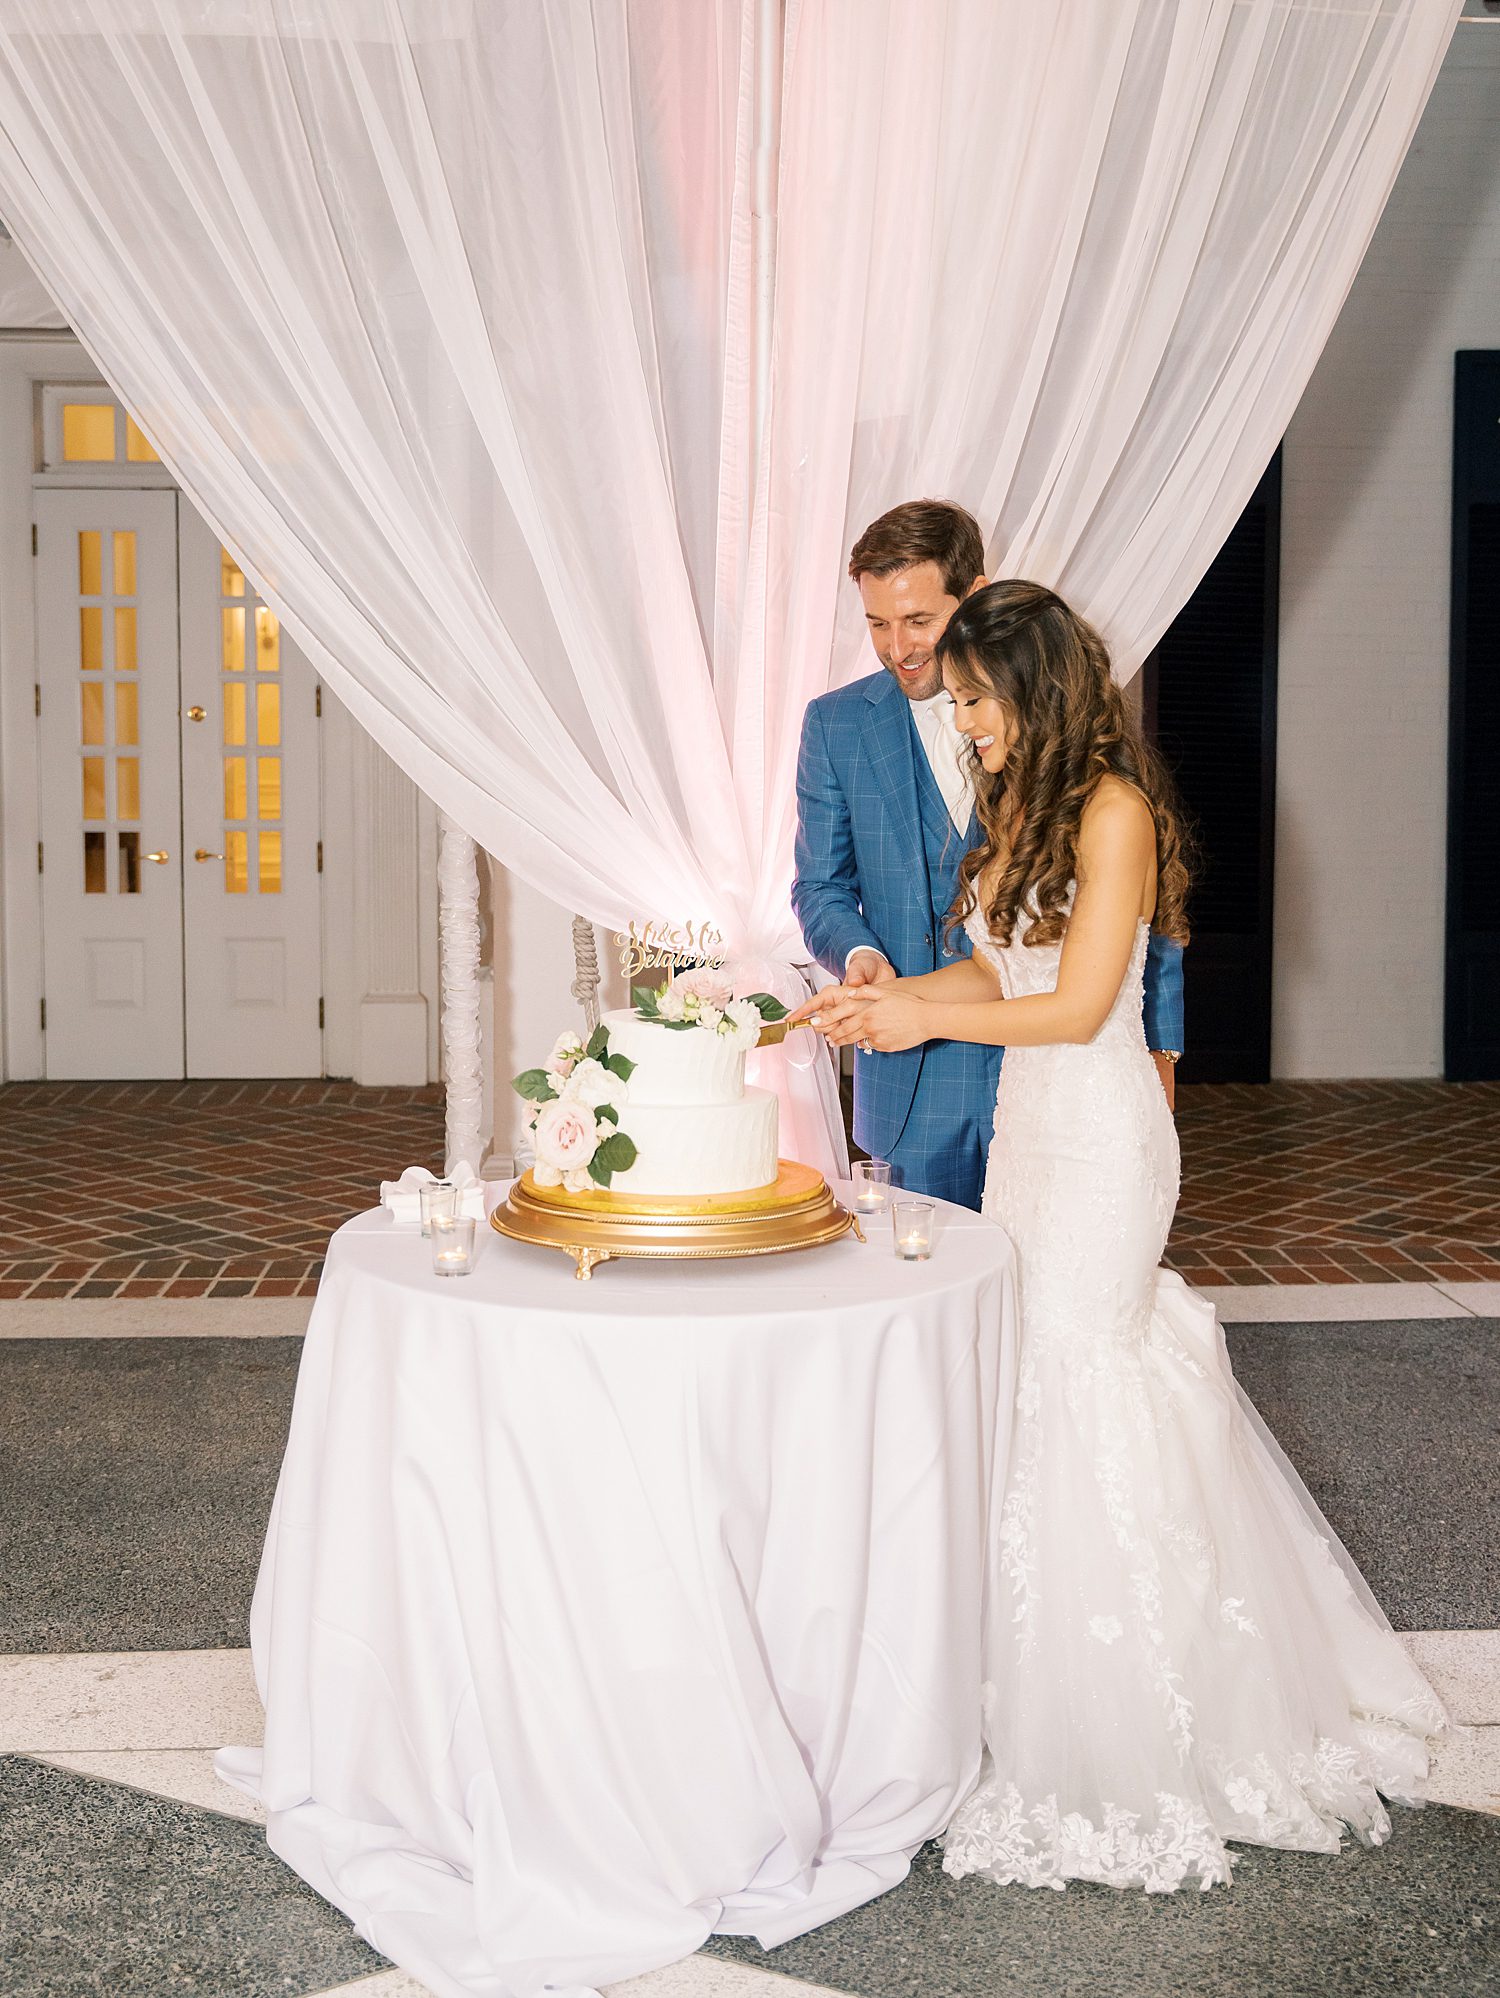 newlyweds cut wedding cake during tented wedding reception at Tampa Yacht Club